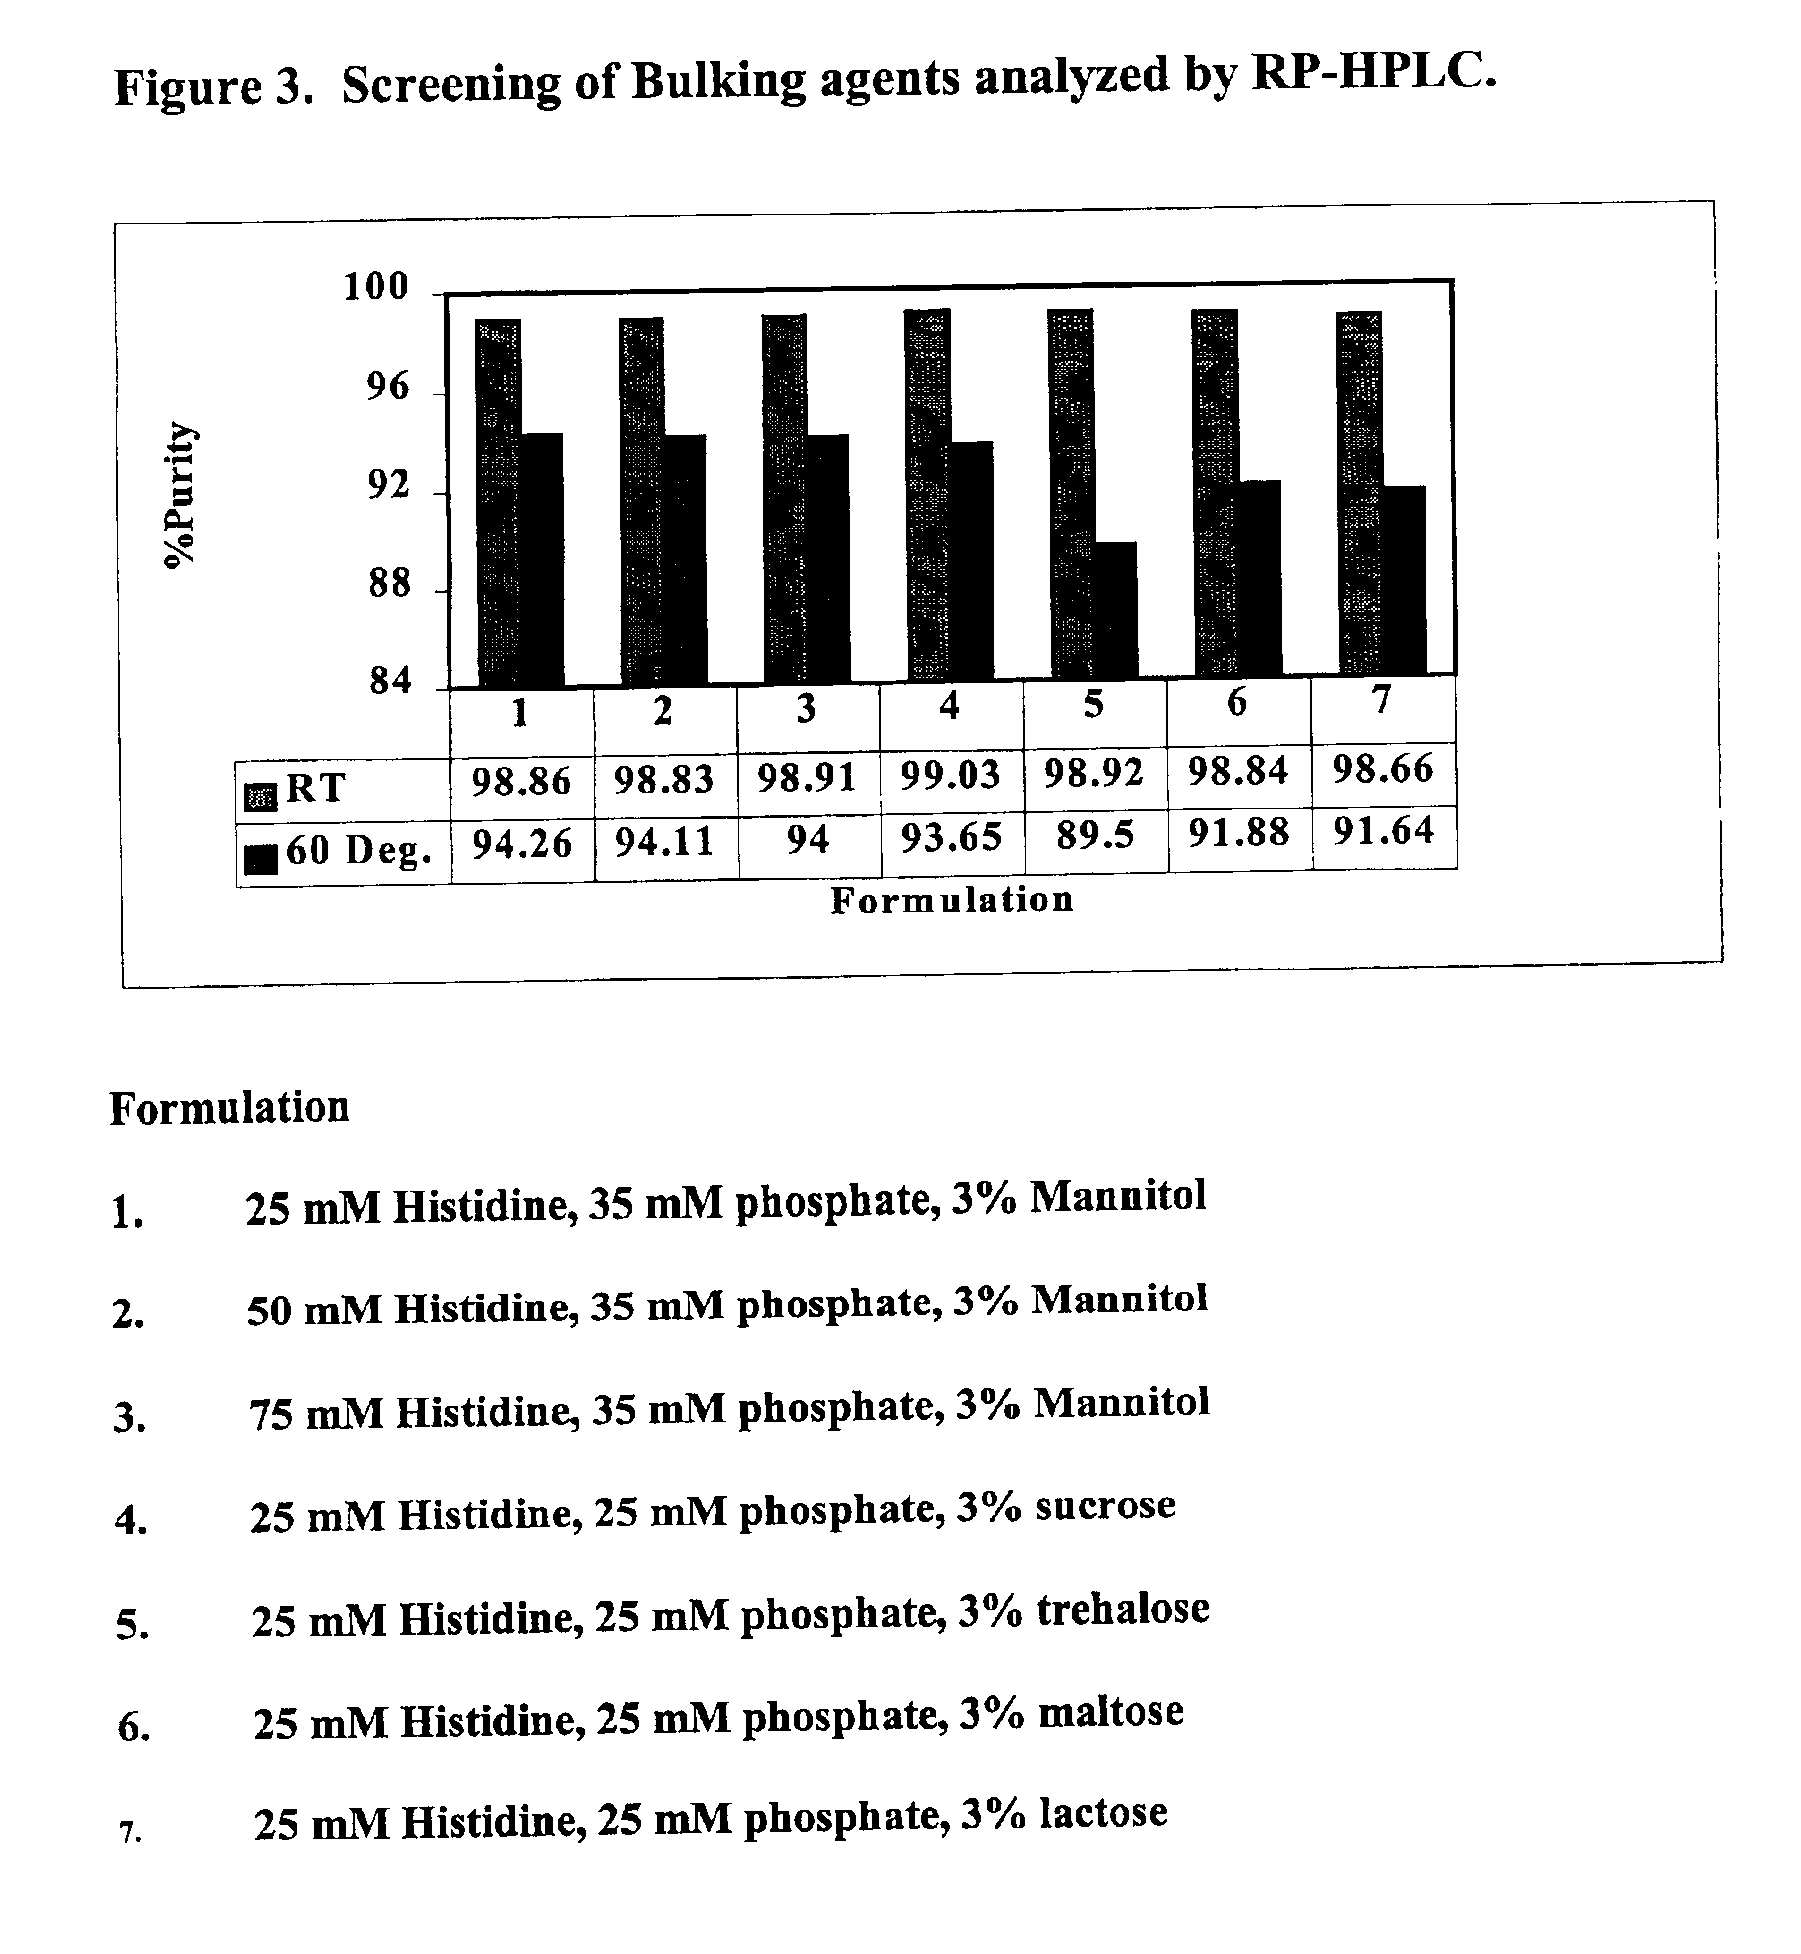 GLP-2 formulations